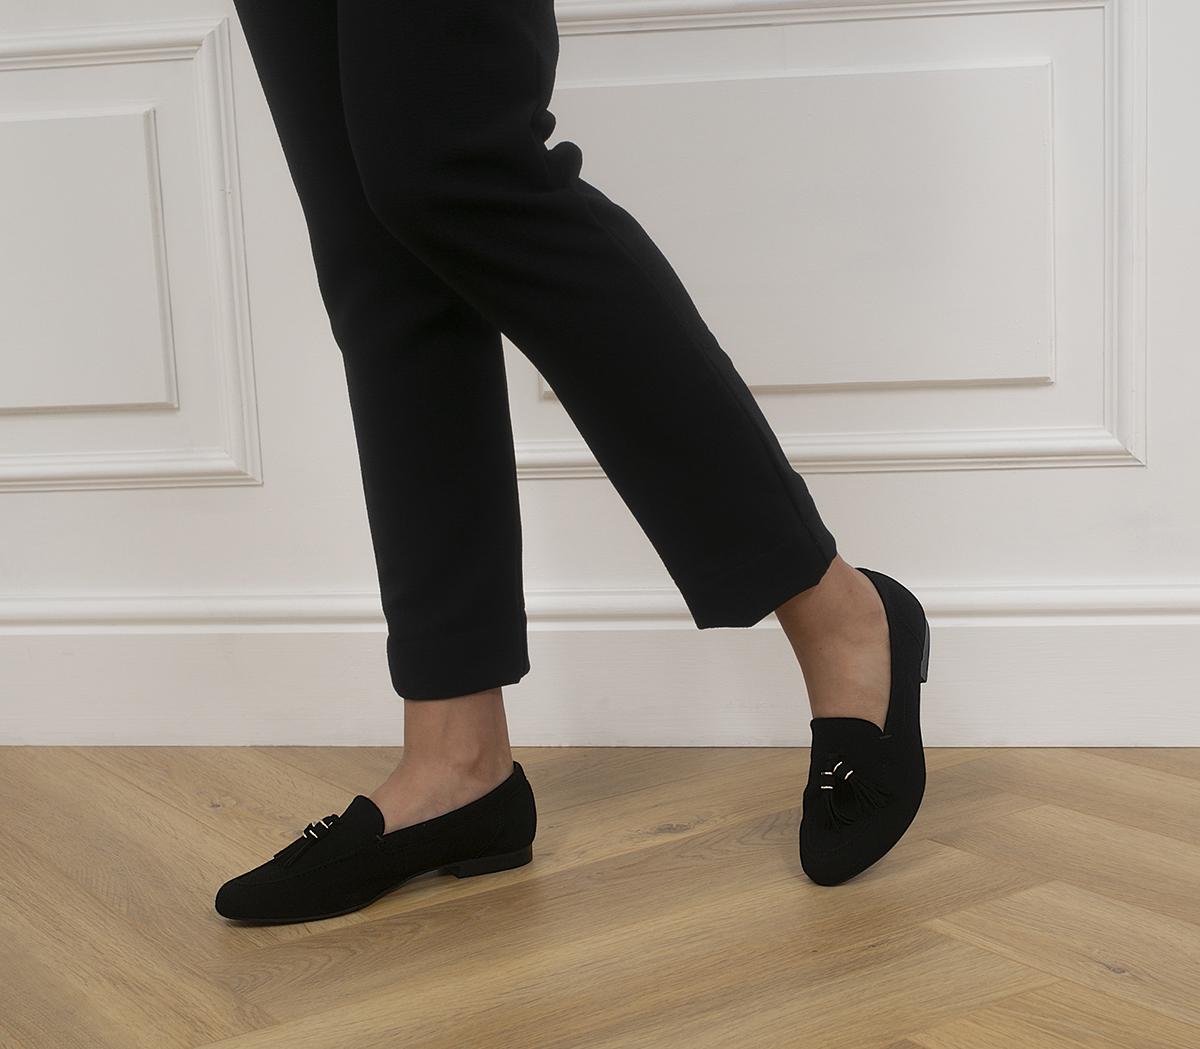 Flick Retro Tassel Loafers Black Suede - Women's Loafers